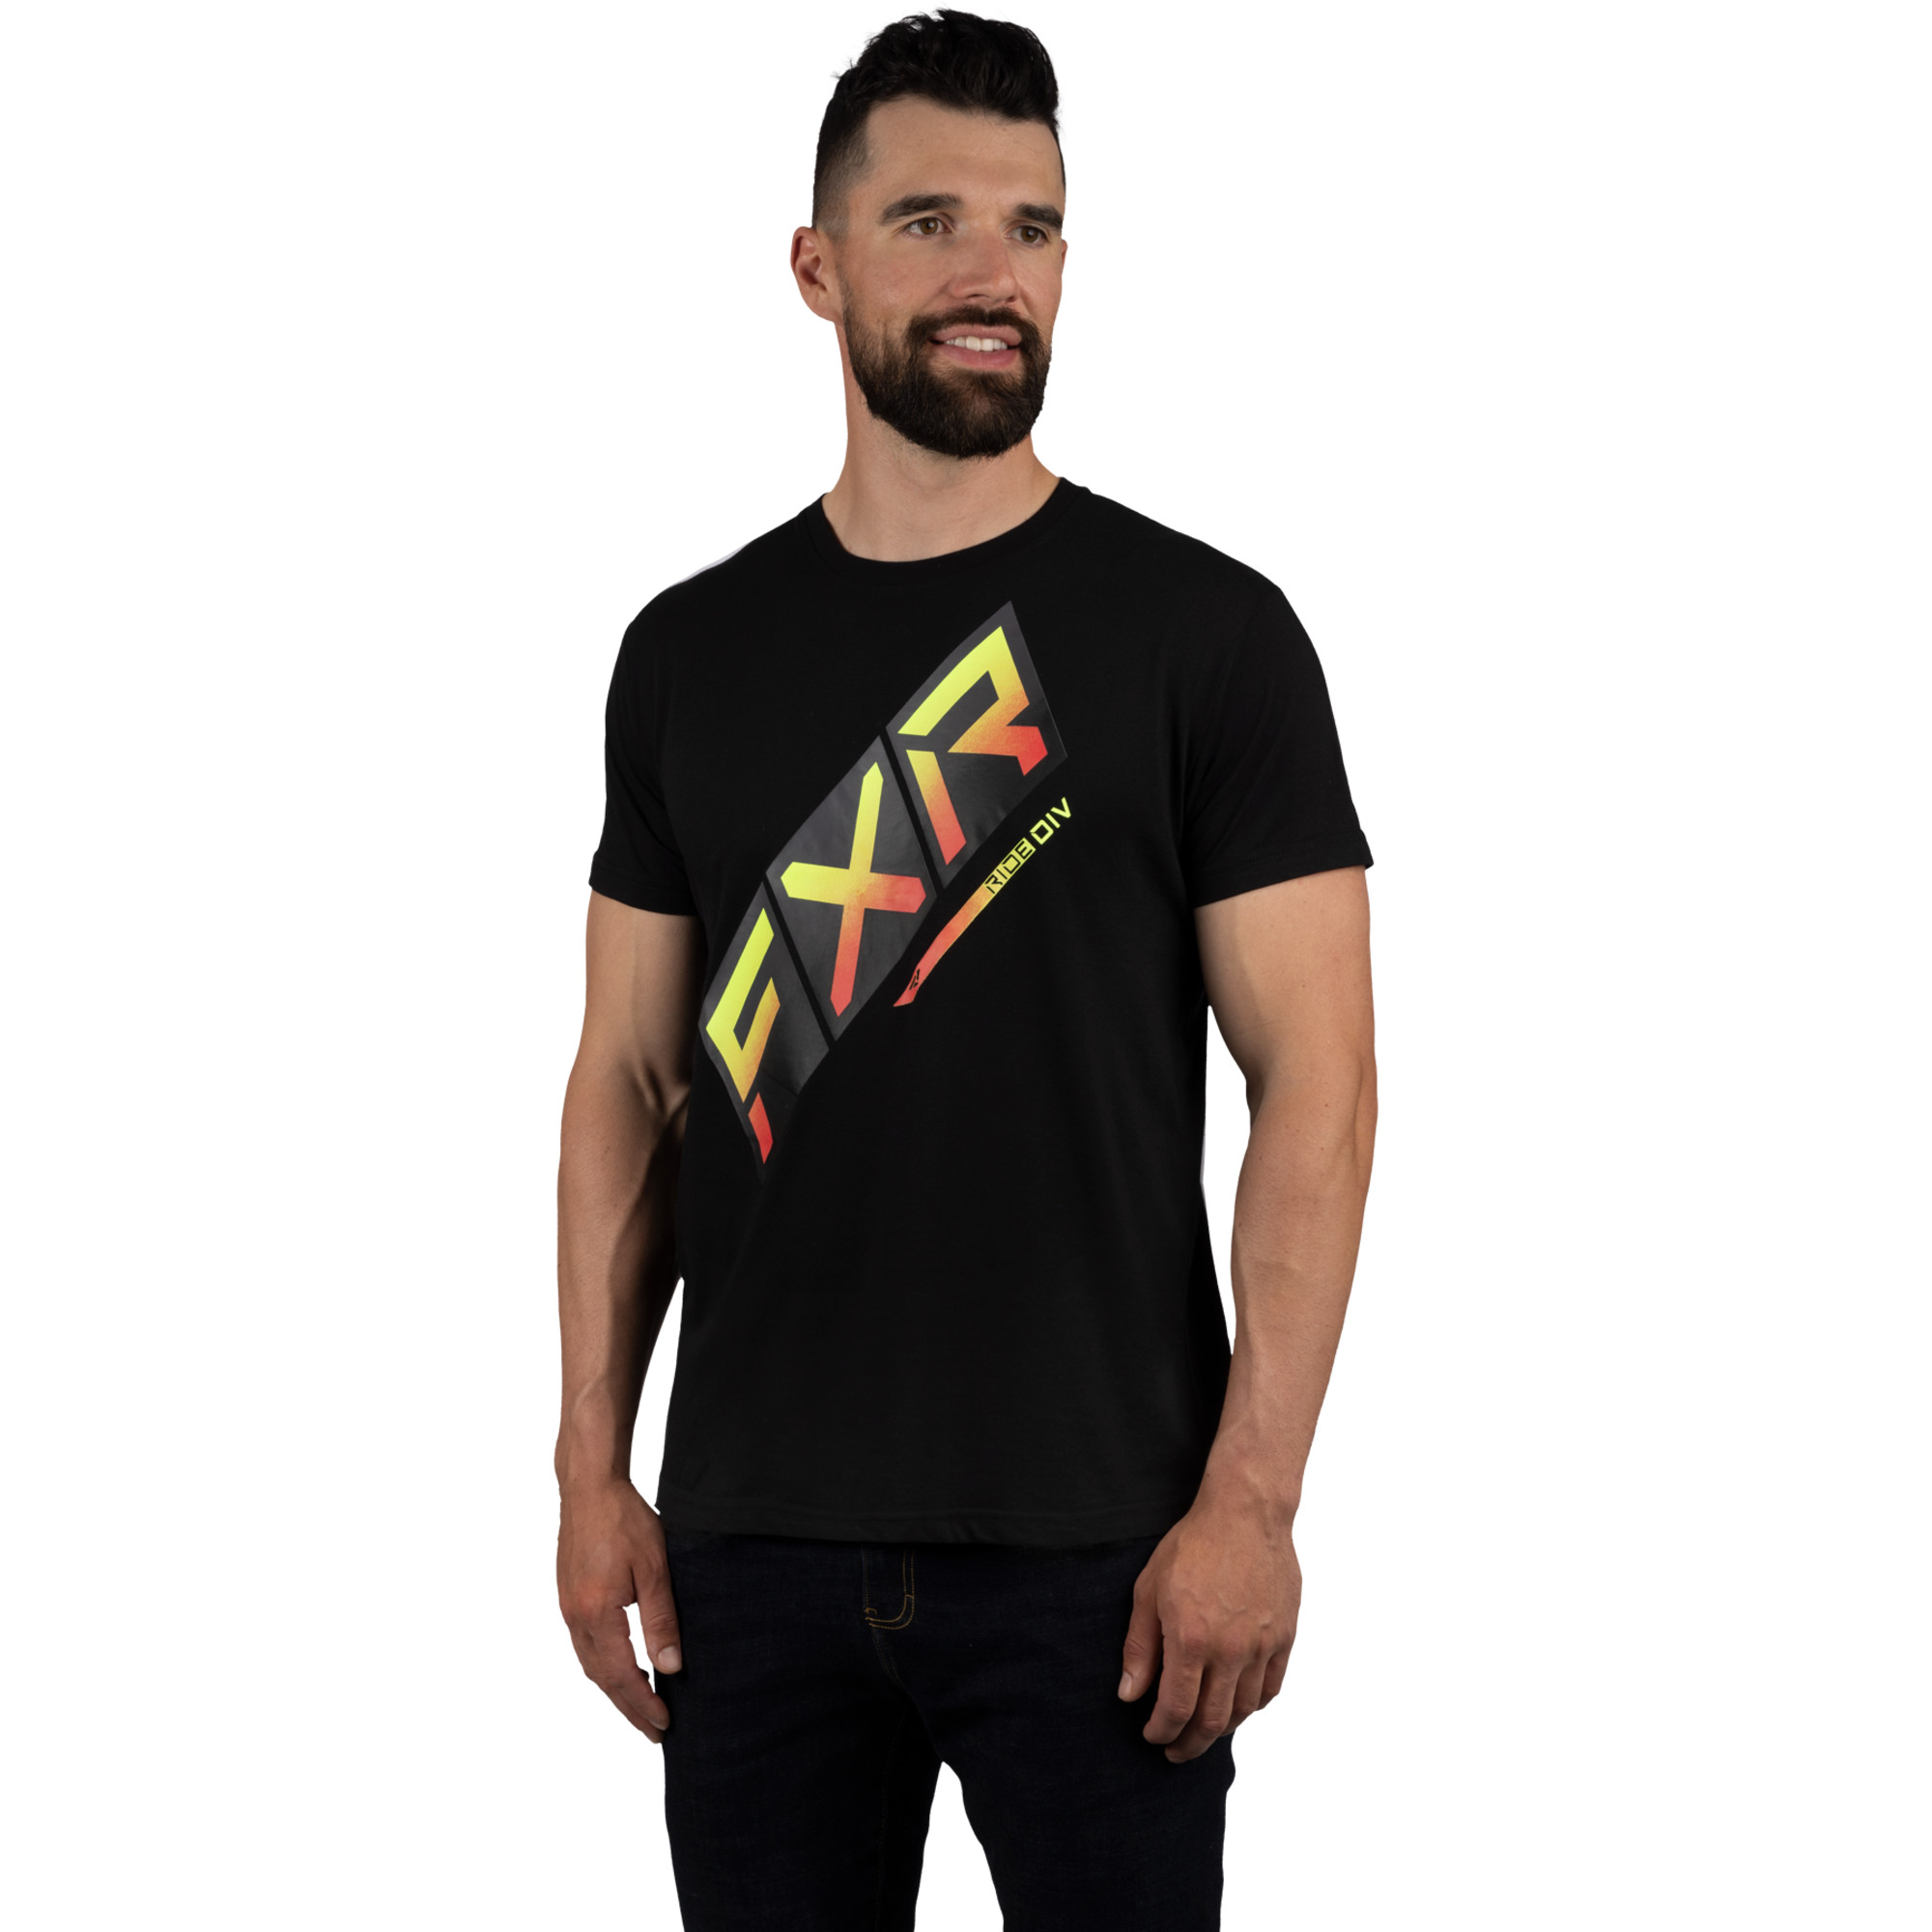 fxr racing t-shirt shirts for men cx premium